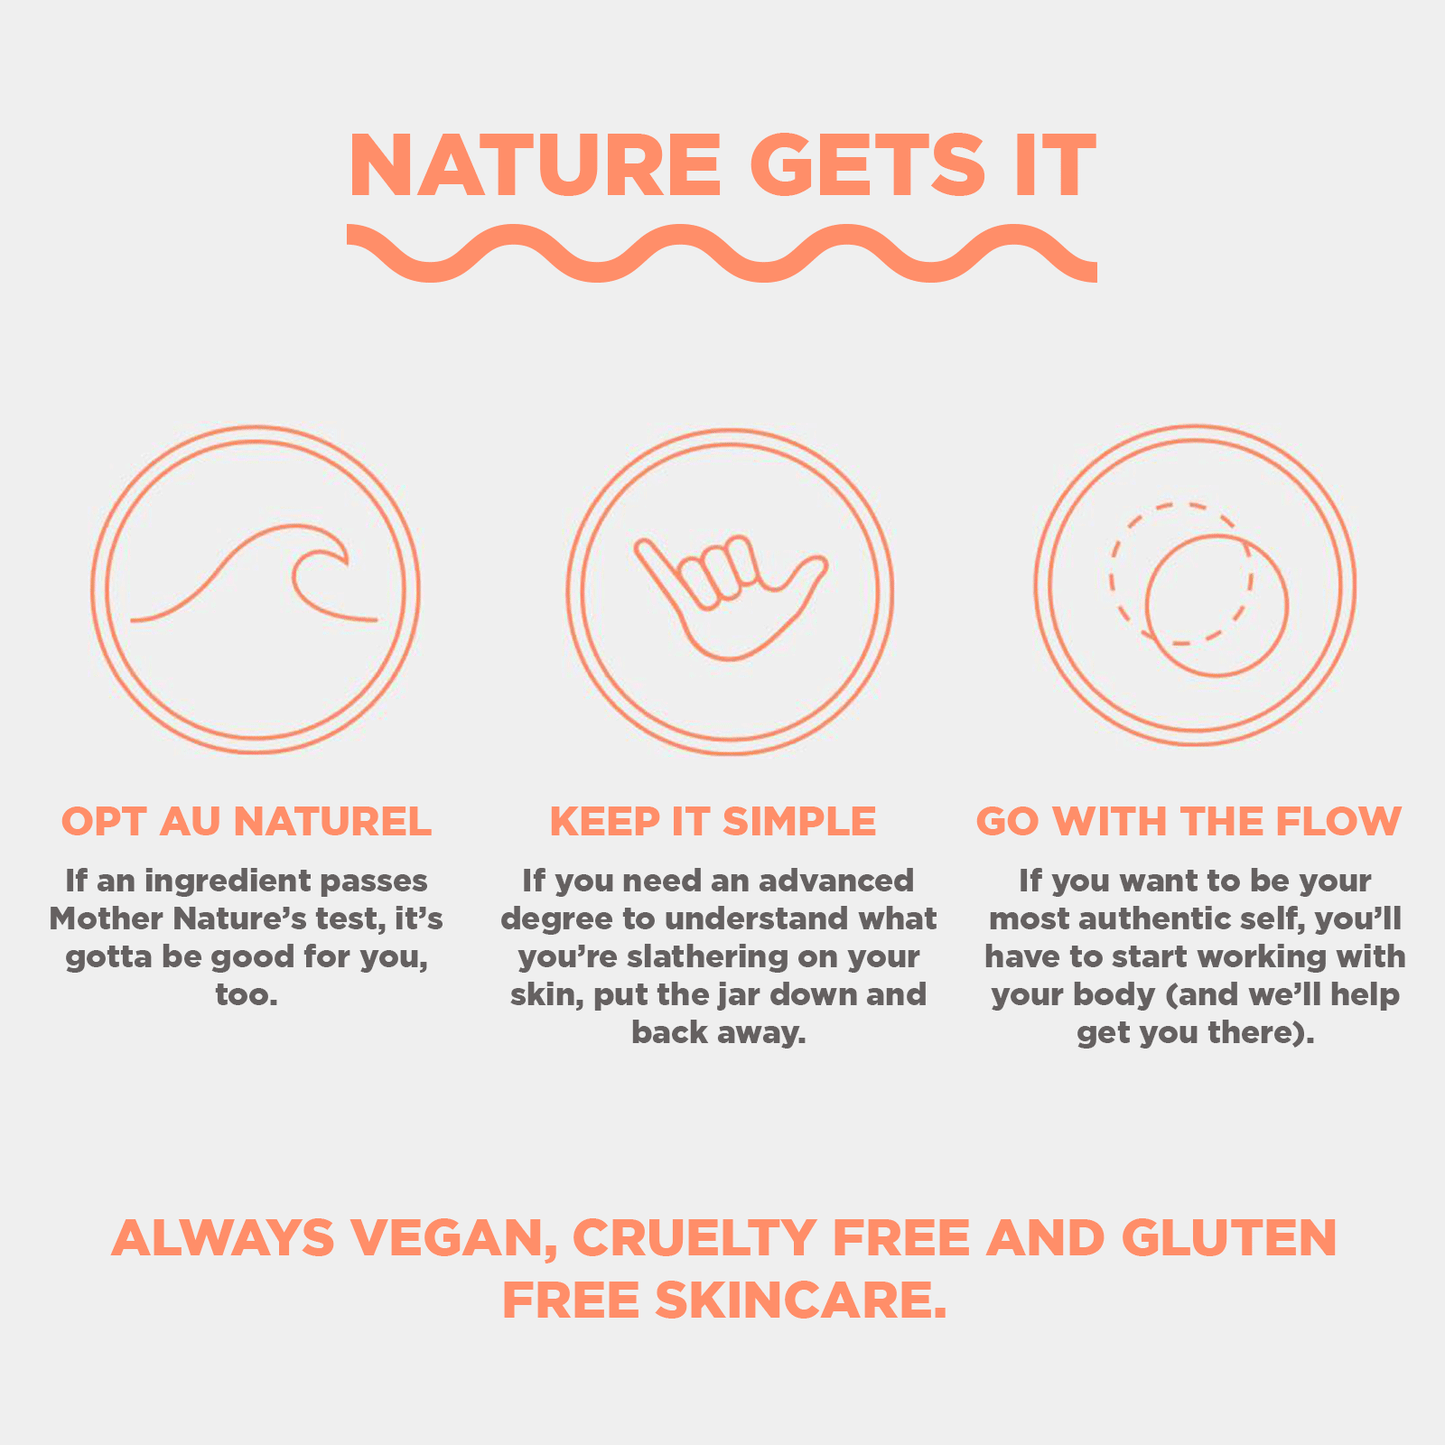 Nature Gets It. Always Vegan, Cruelty Free, and Gluten Free Skincare.